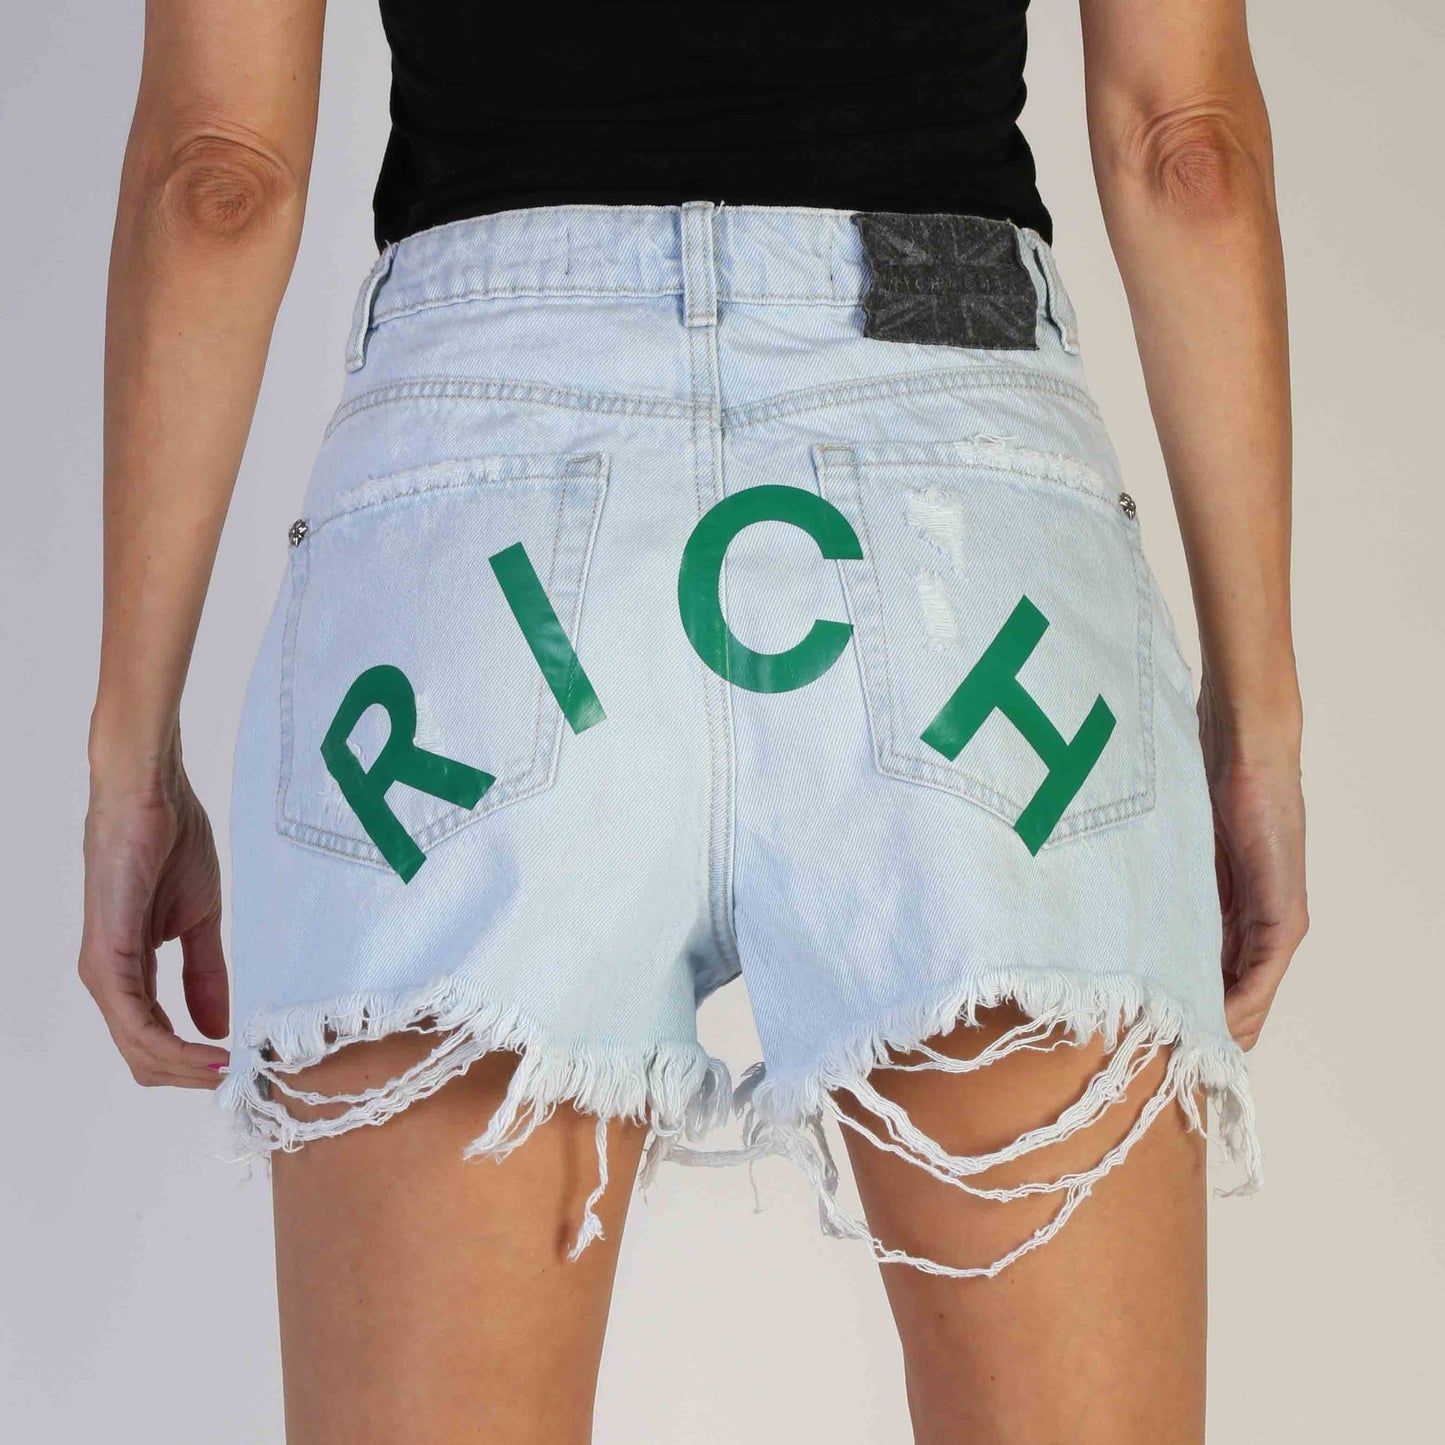 Richmond Shorts 